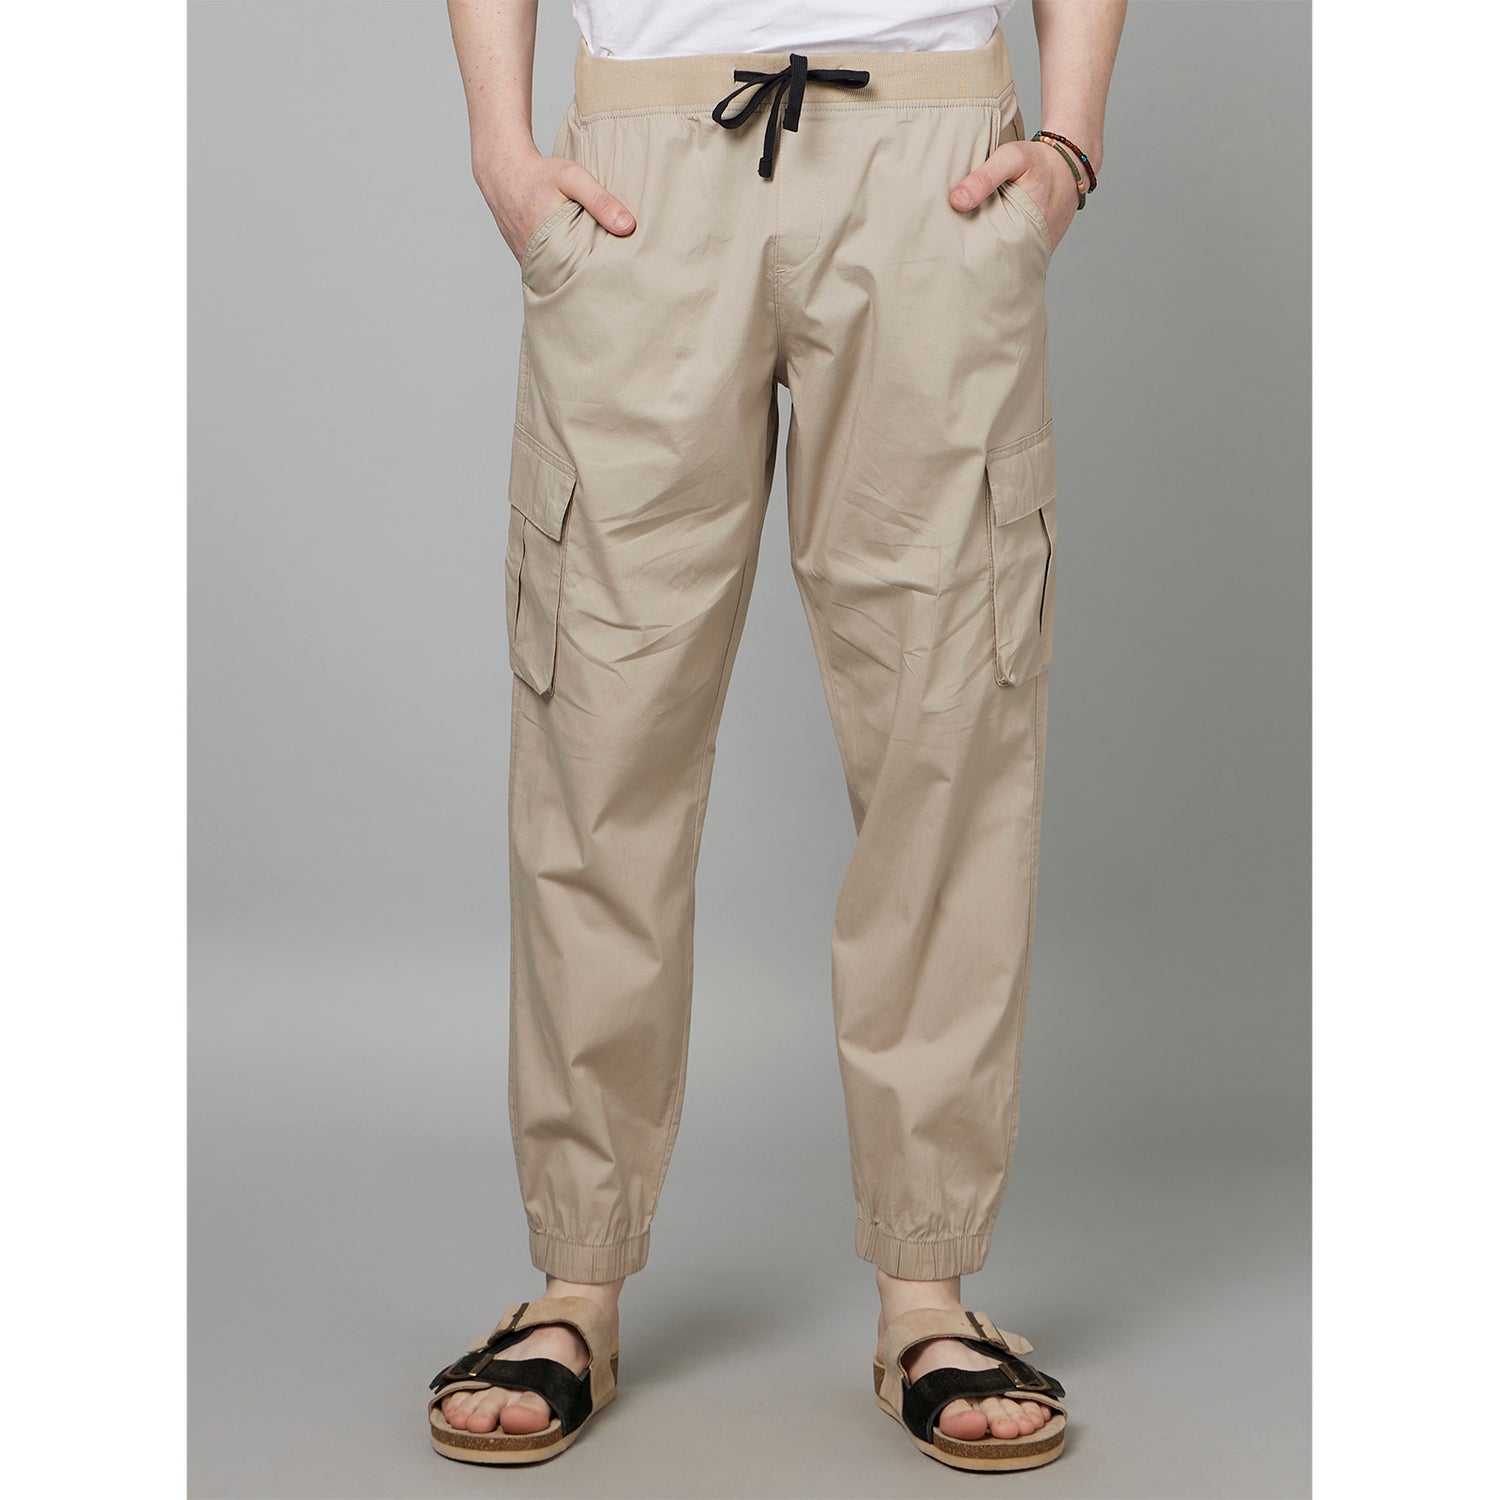 Beige Classic Mid-Rise Cotton Joggers Trousers (FOEDEN)